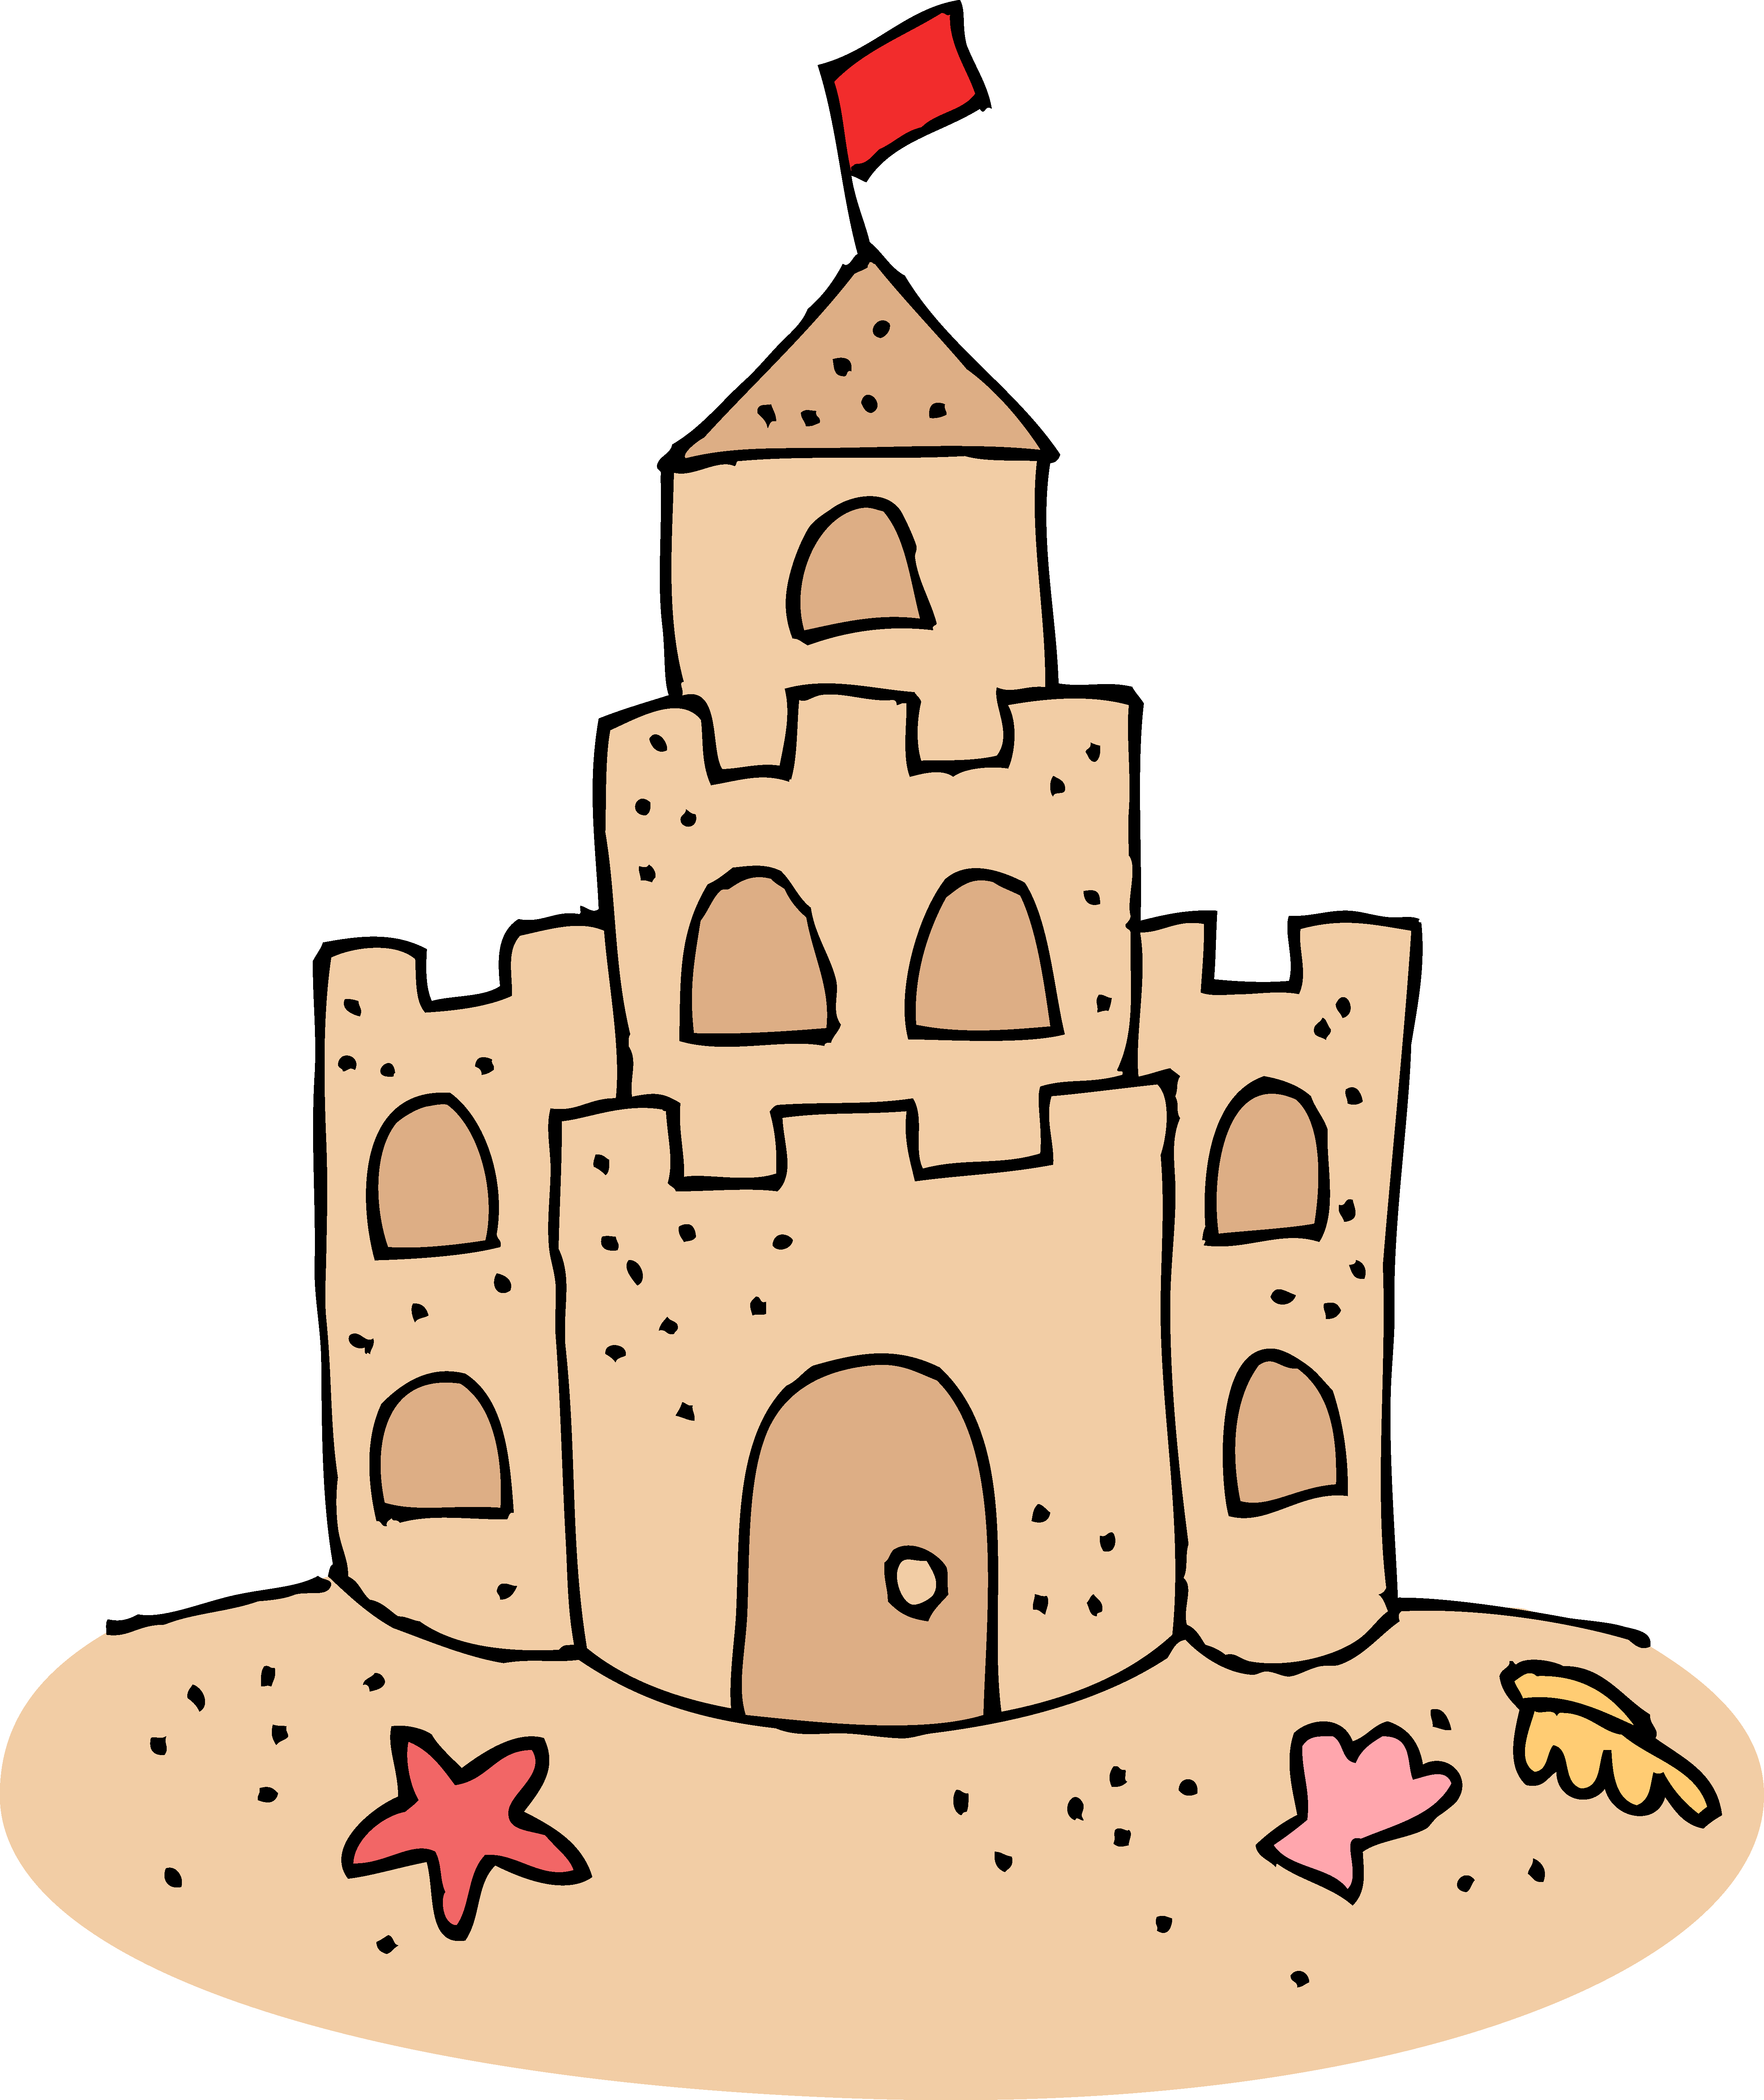 Sandcastle picture. Замок рисунок. Изображение замка для детей. Крепость для детей. Замок мультяшный.